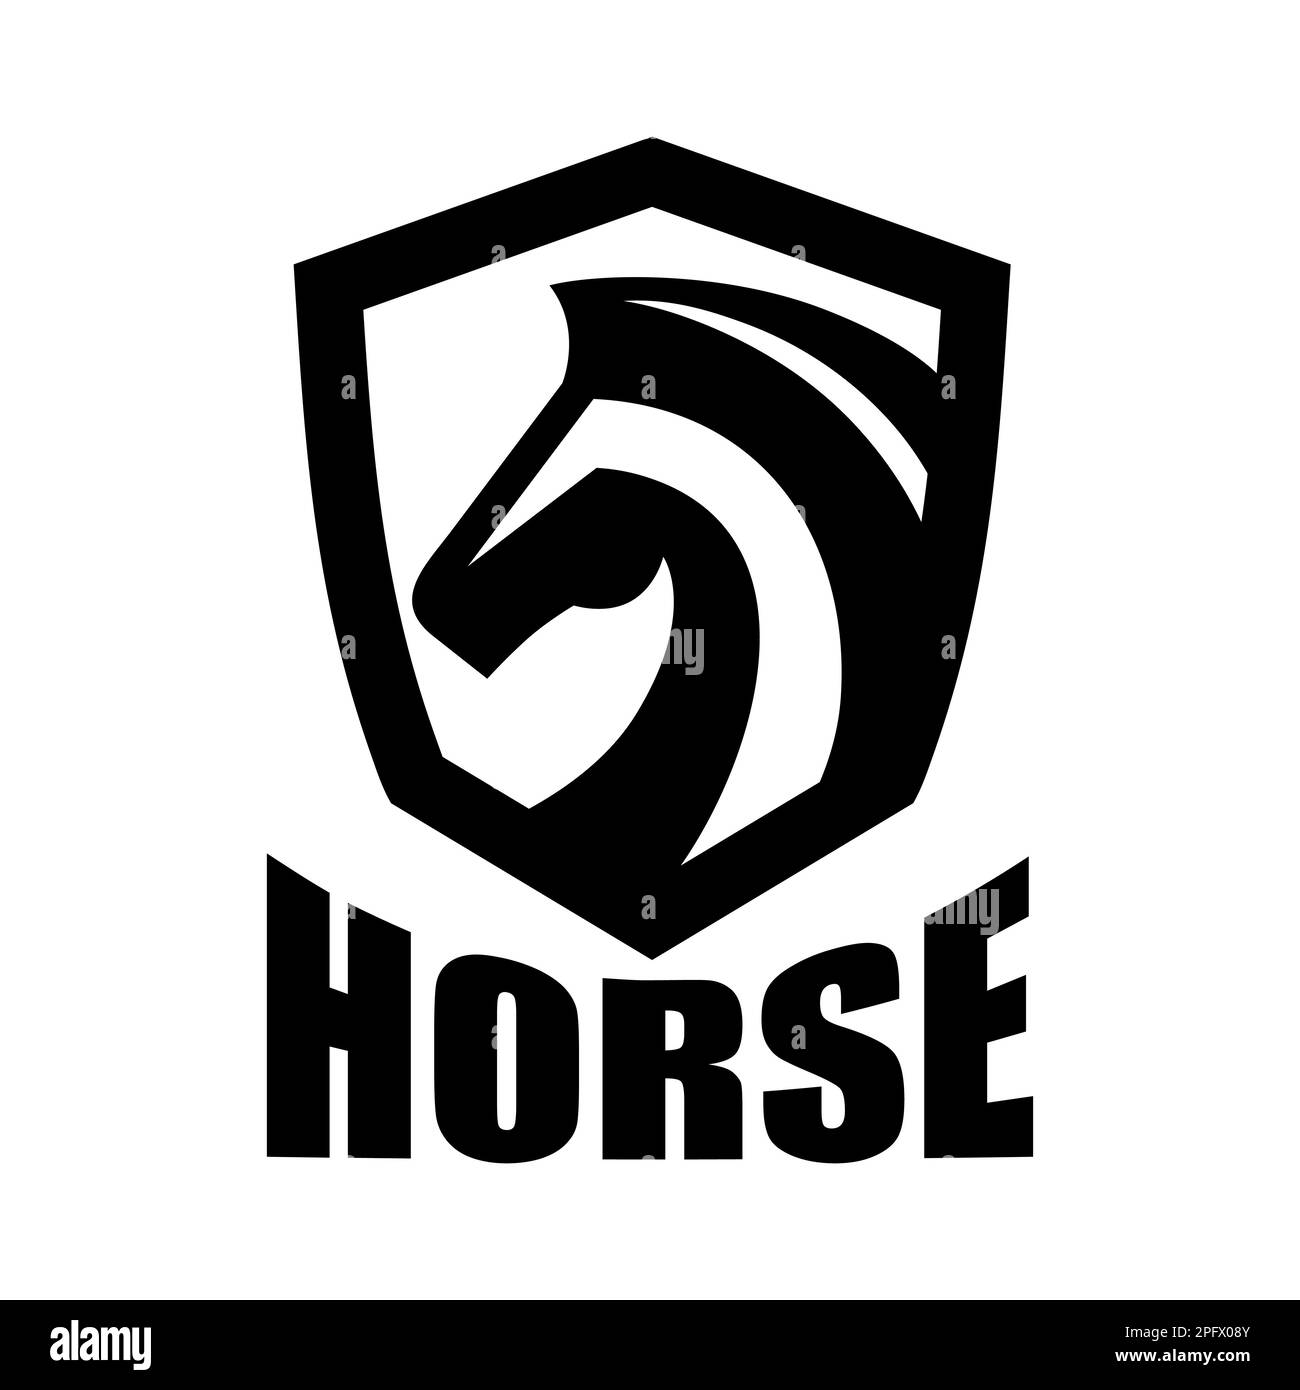 Modern horse arabian steed logo. Vector illustration. Stock Vector